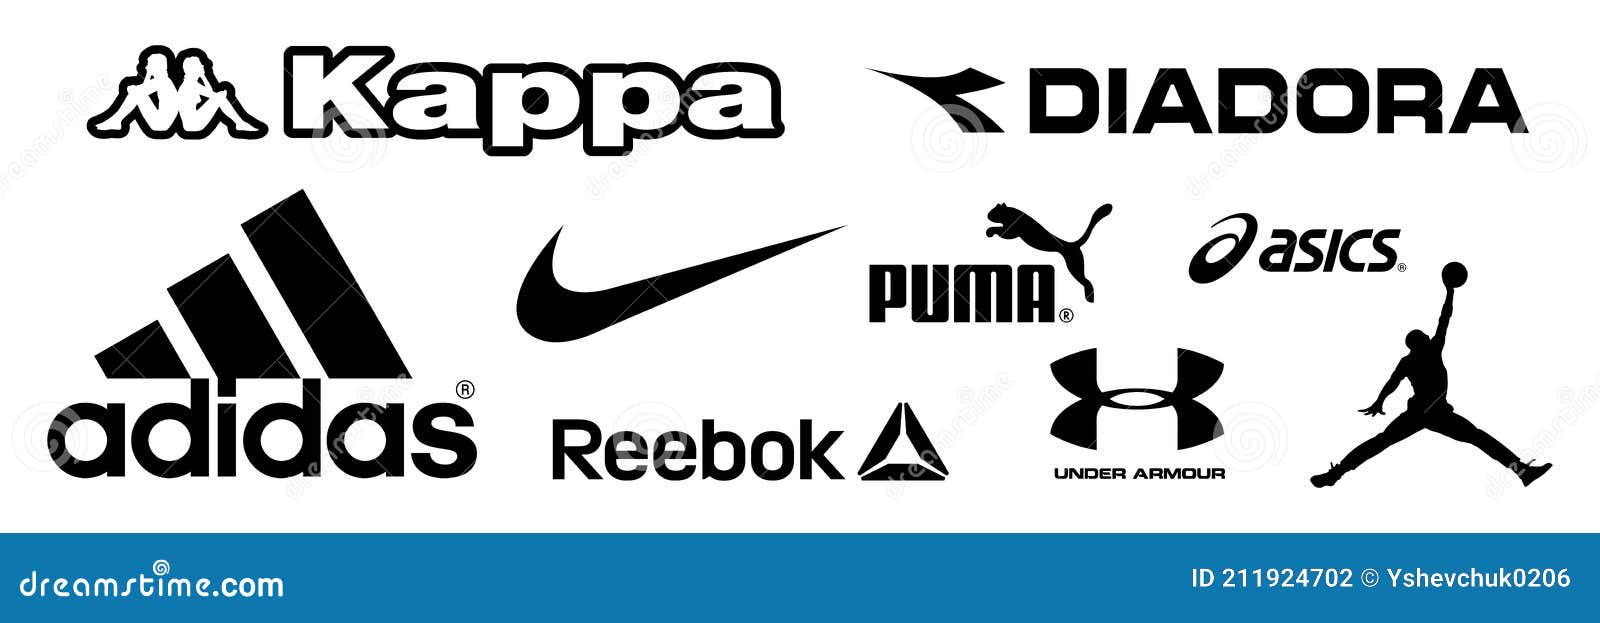 Adidas, Nike, Reebok, Asics, Jordan, Puma, Under Armour, Kappa ...